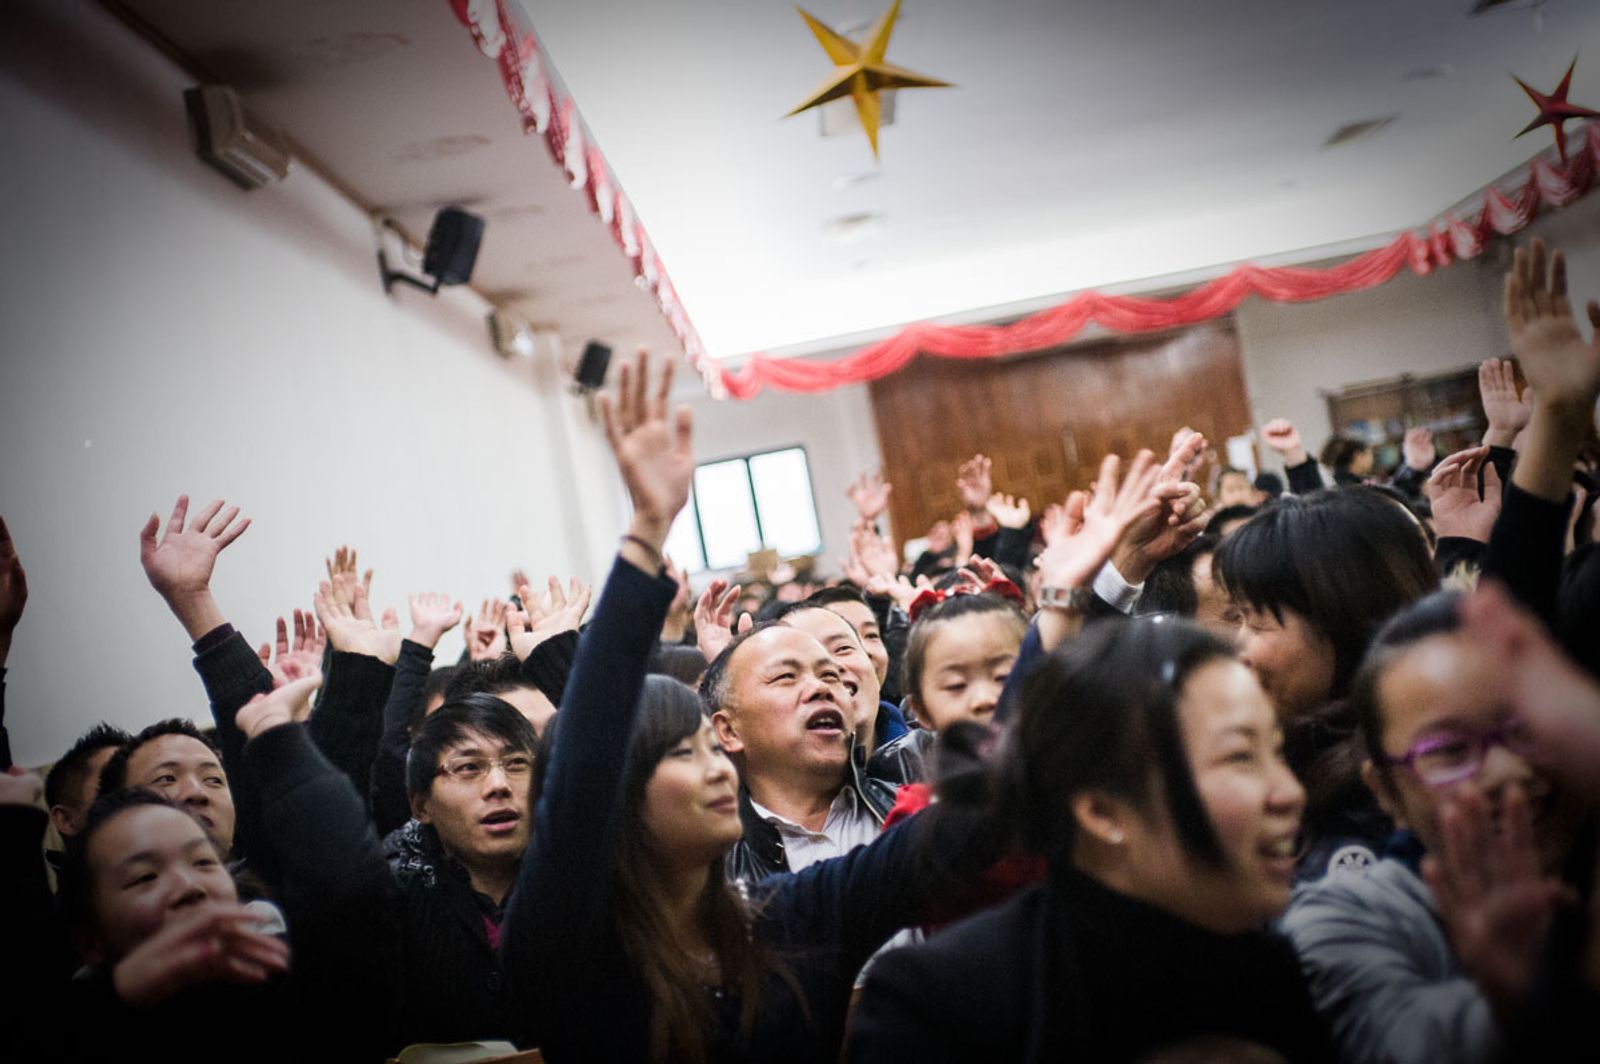 © Agnese Morganti - Prato, faithfuls at the Chinese Evengelical Church